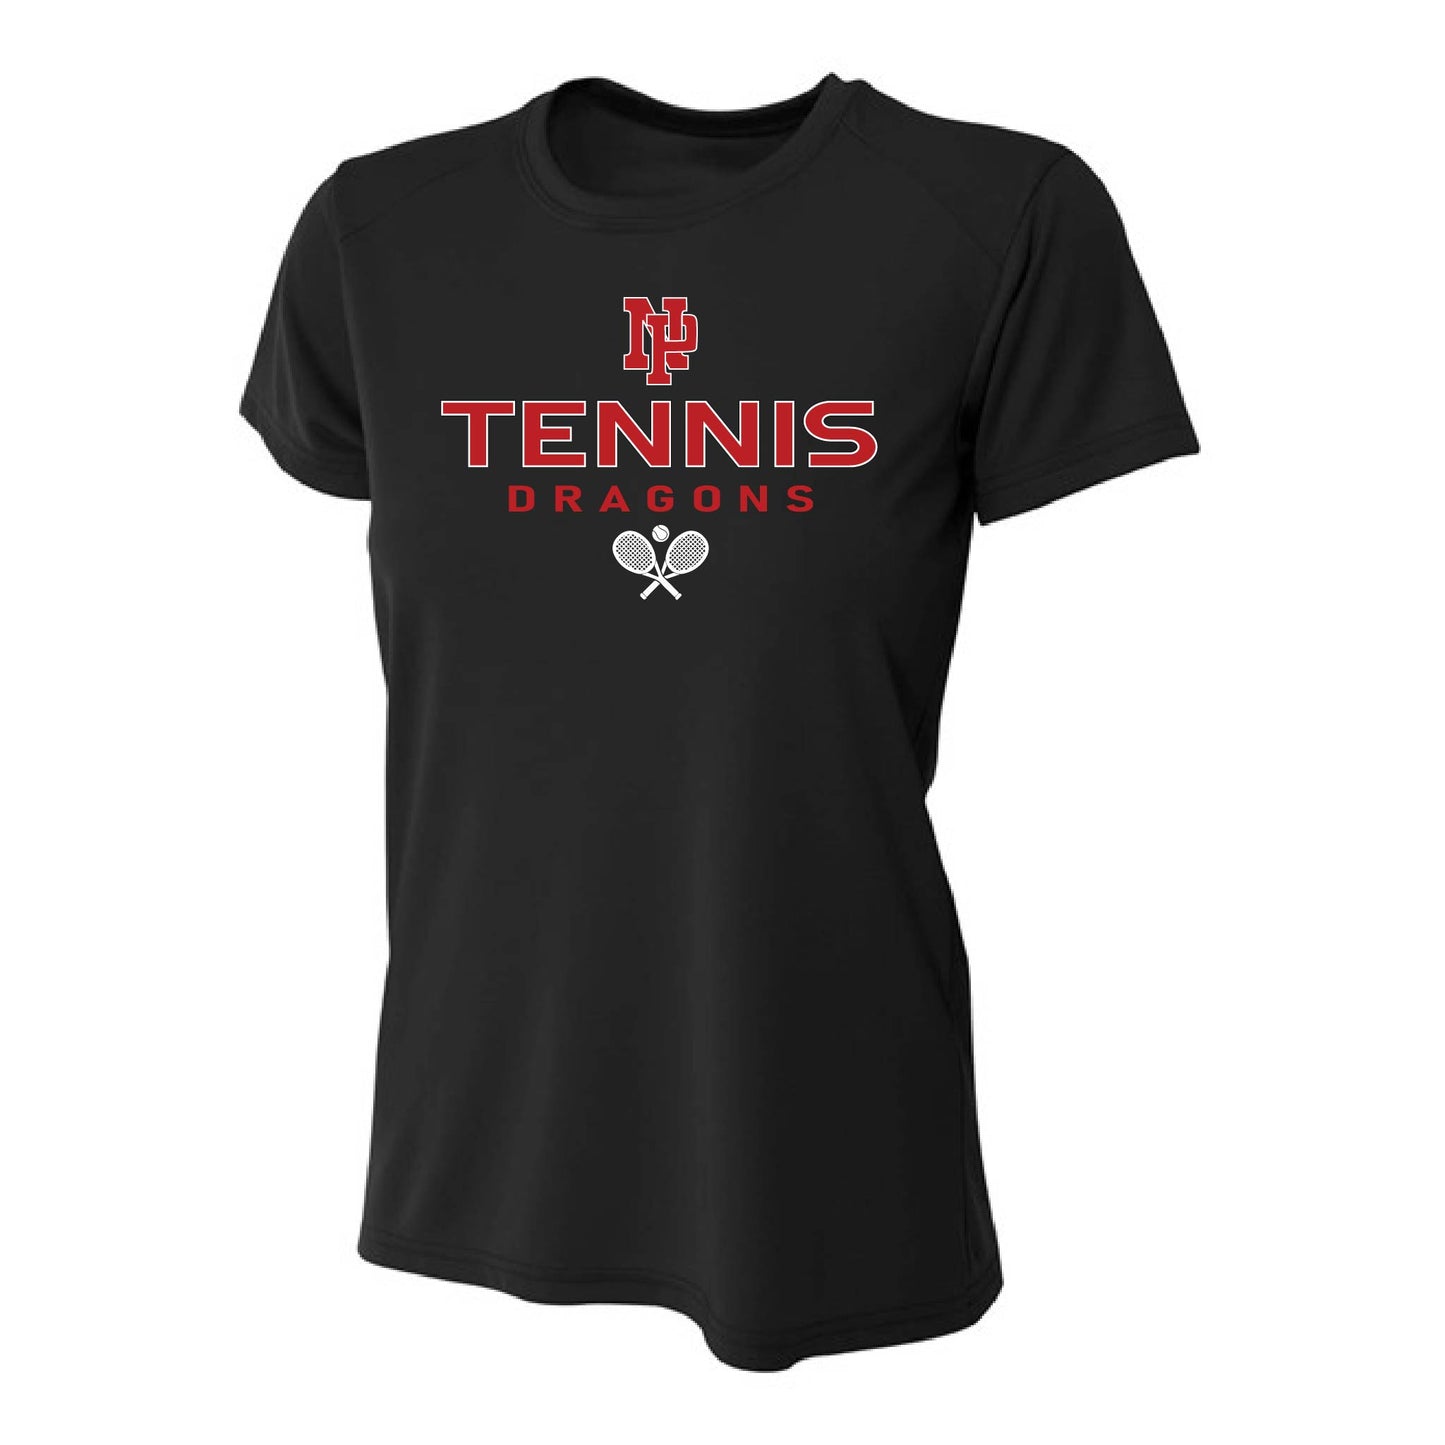 Womens Short Sleeve T-Shirt - Dragons TENNIS